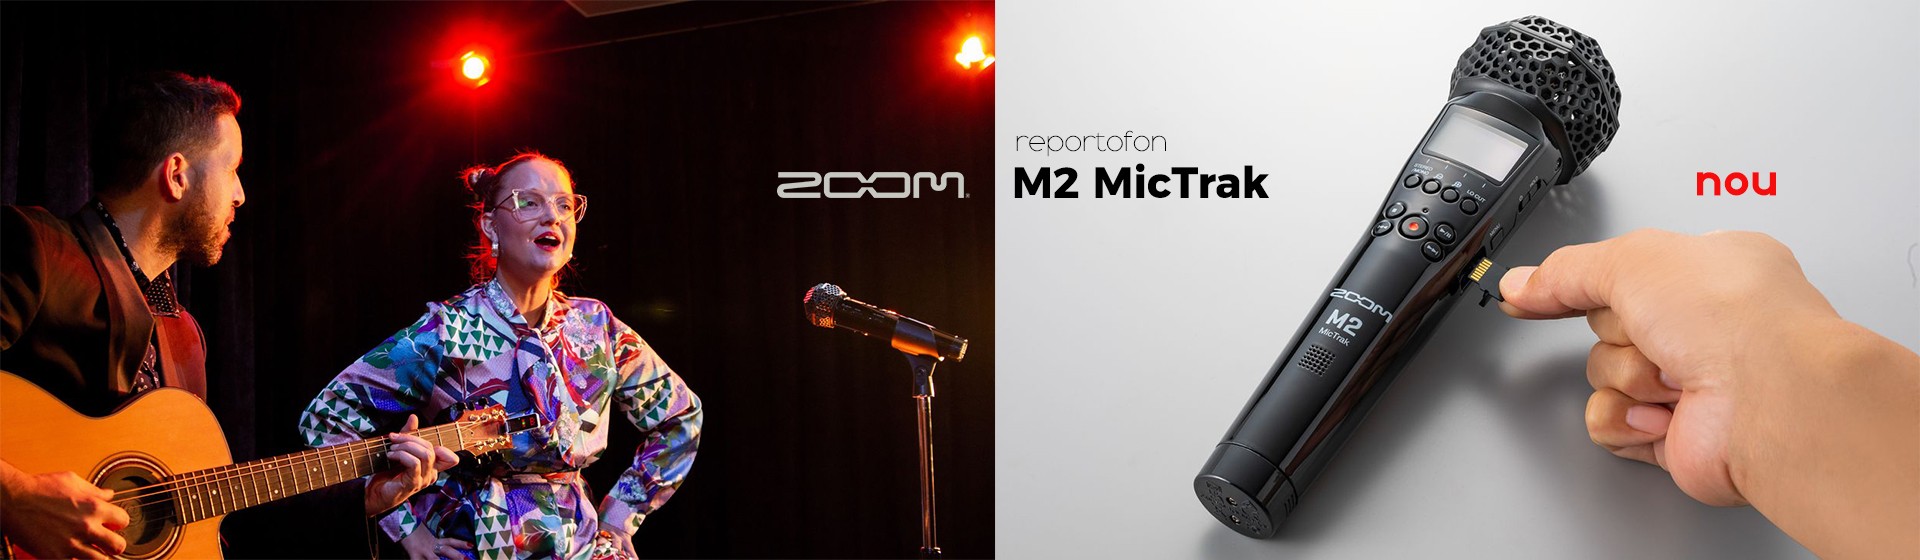 Reportofon Zoom M2 MicTrak